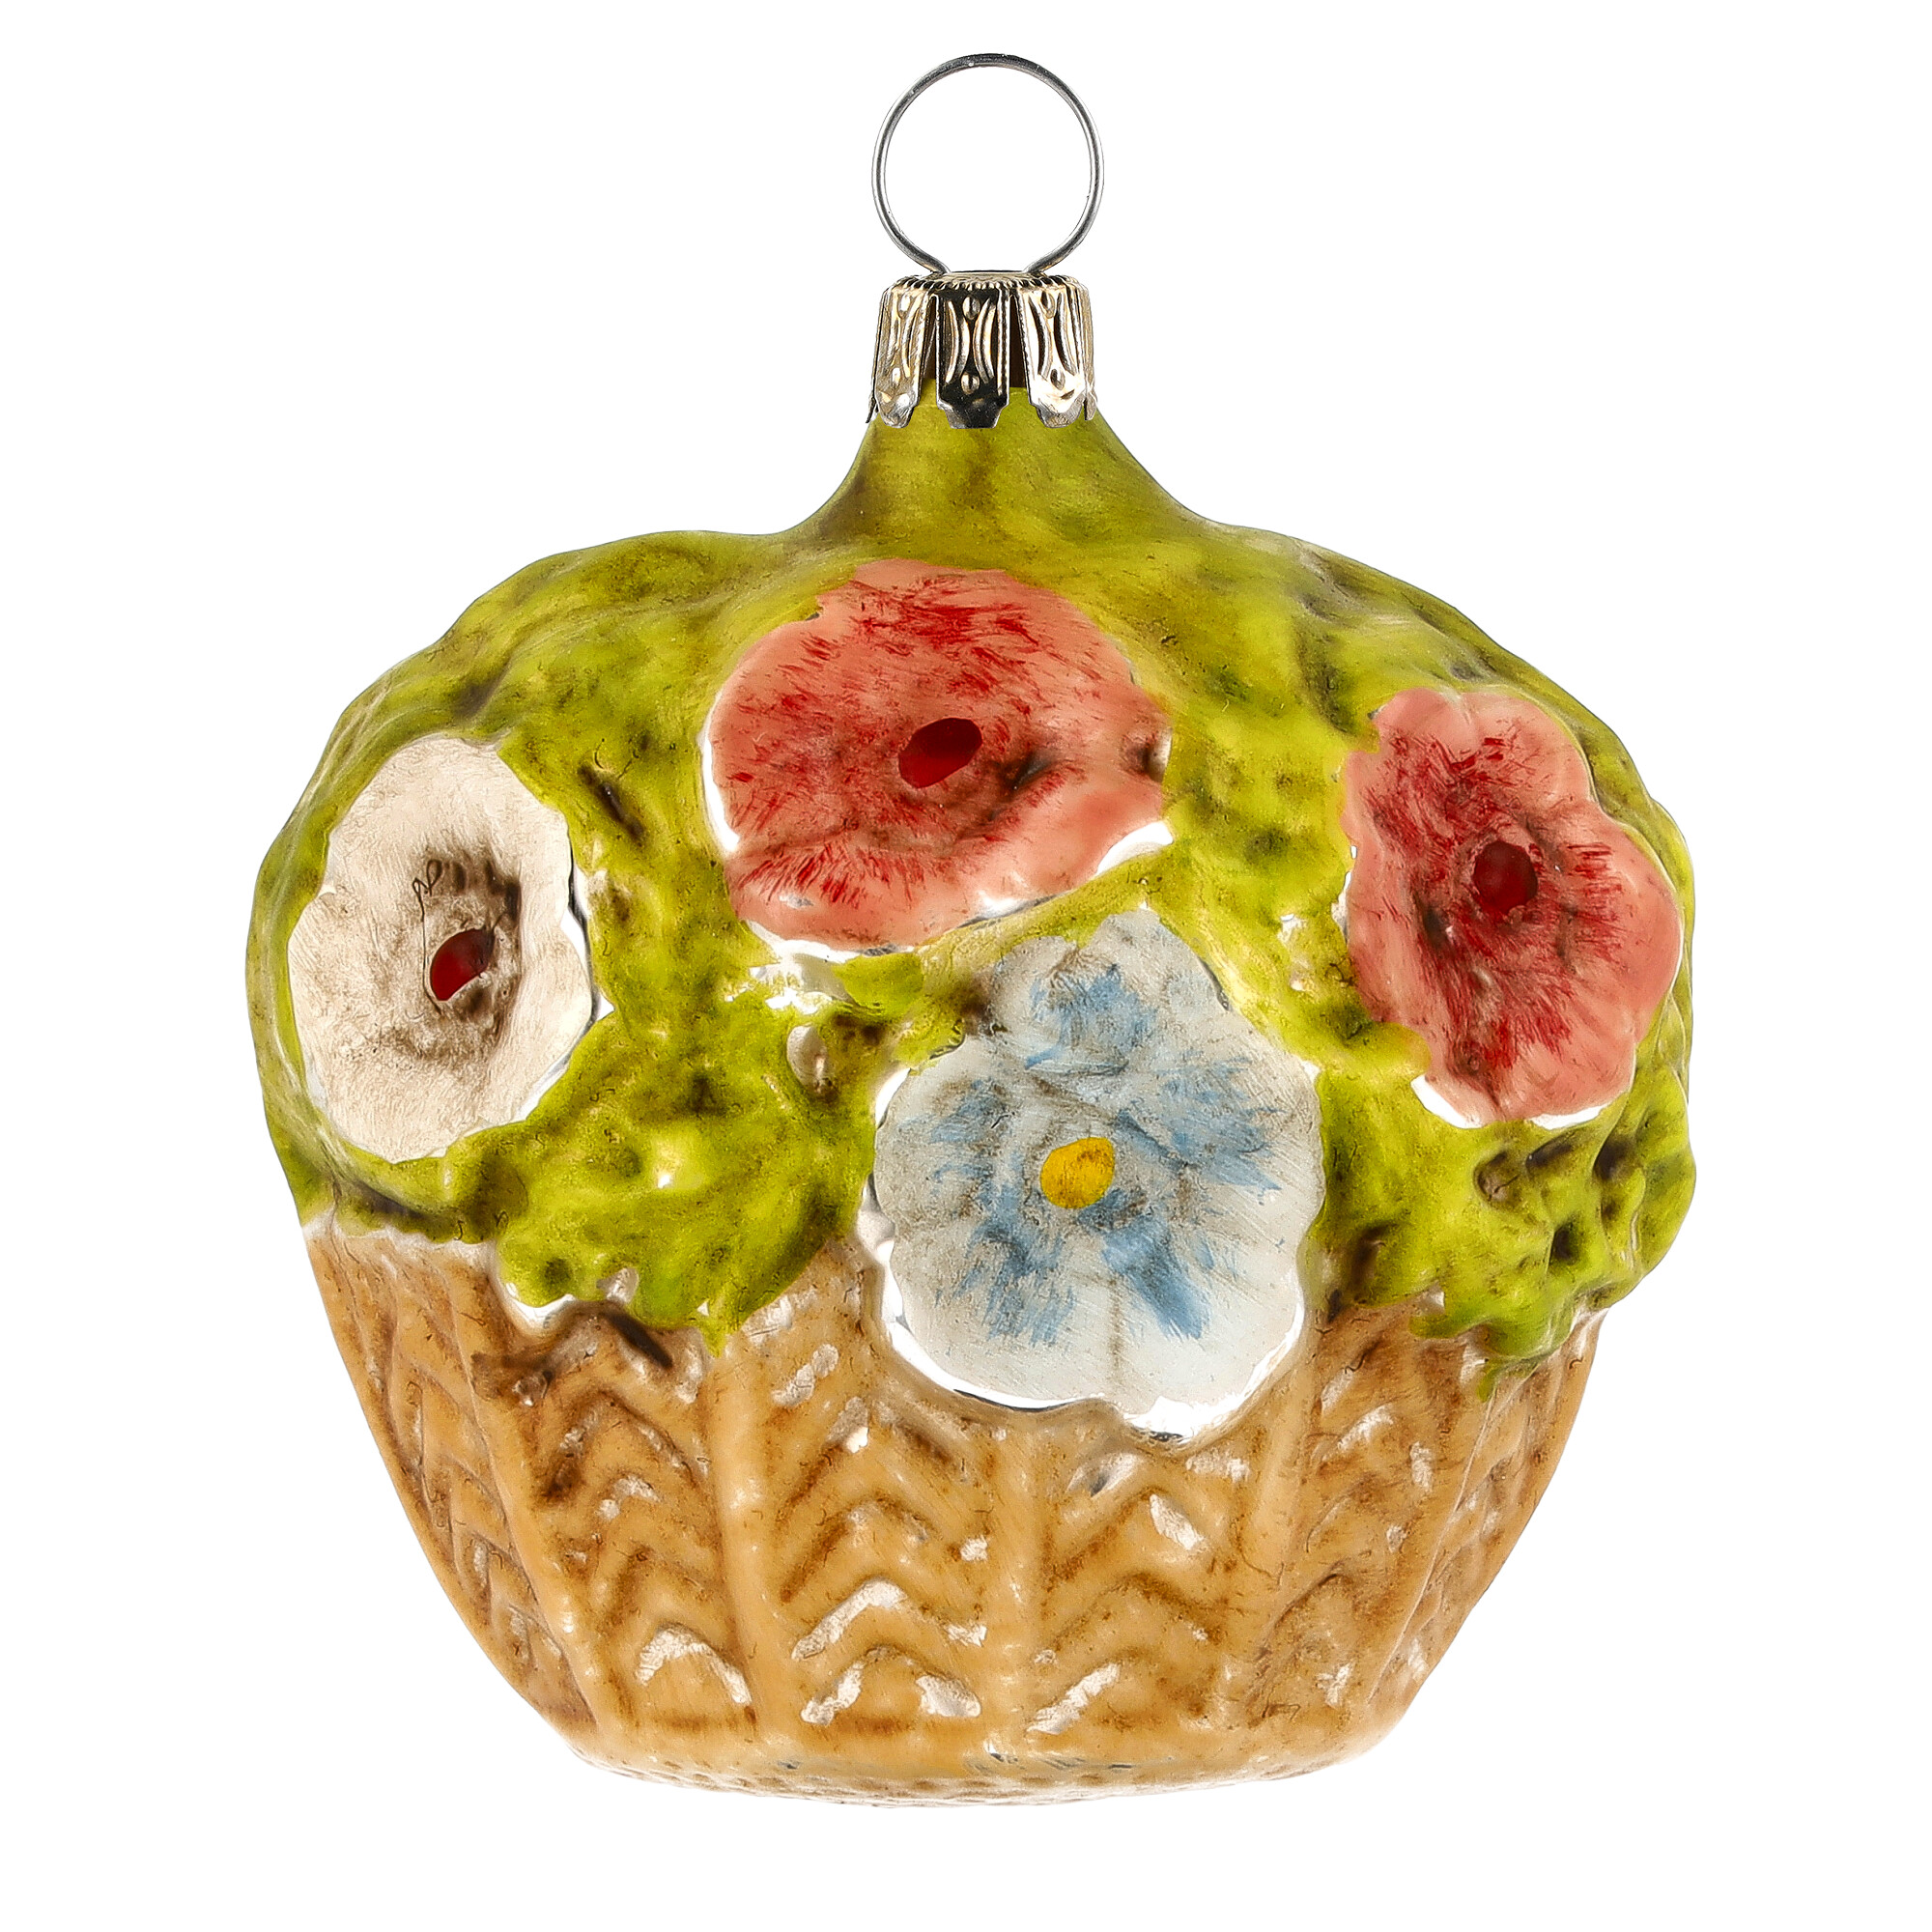 Retro Vintage style Christmas Glass Ornament - Large flower basket